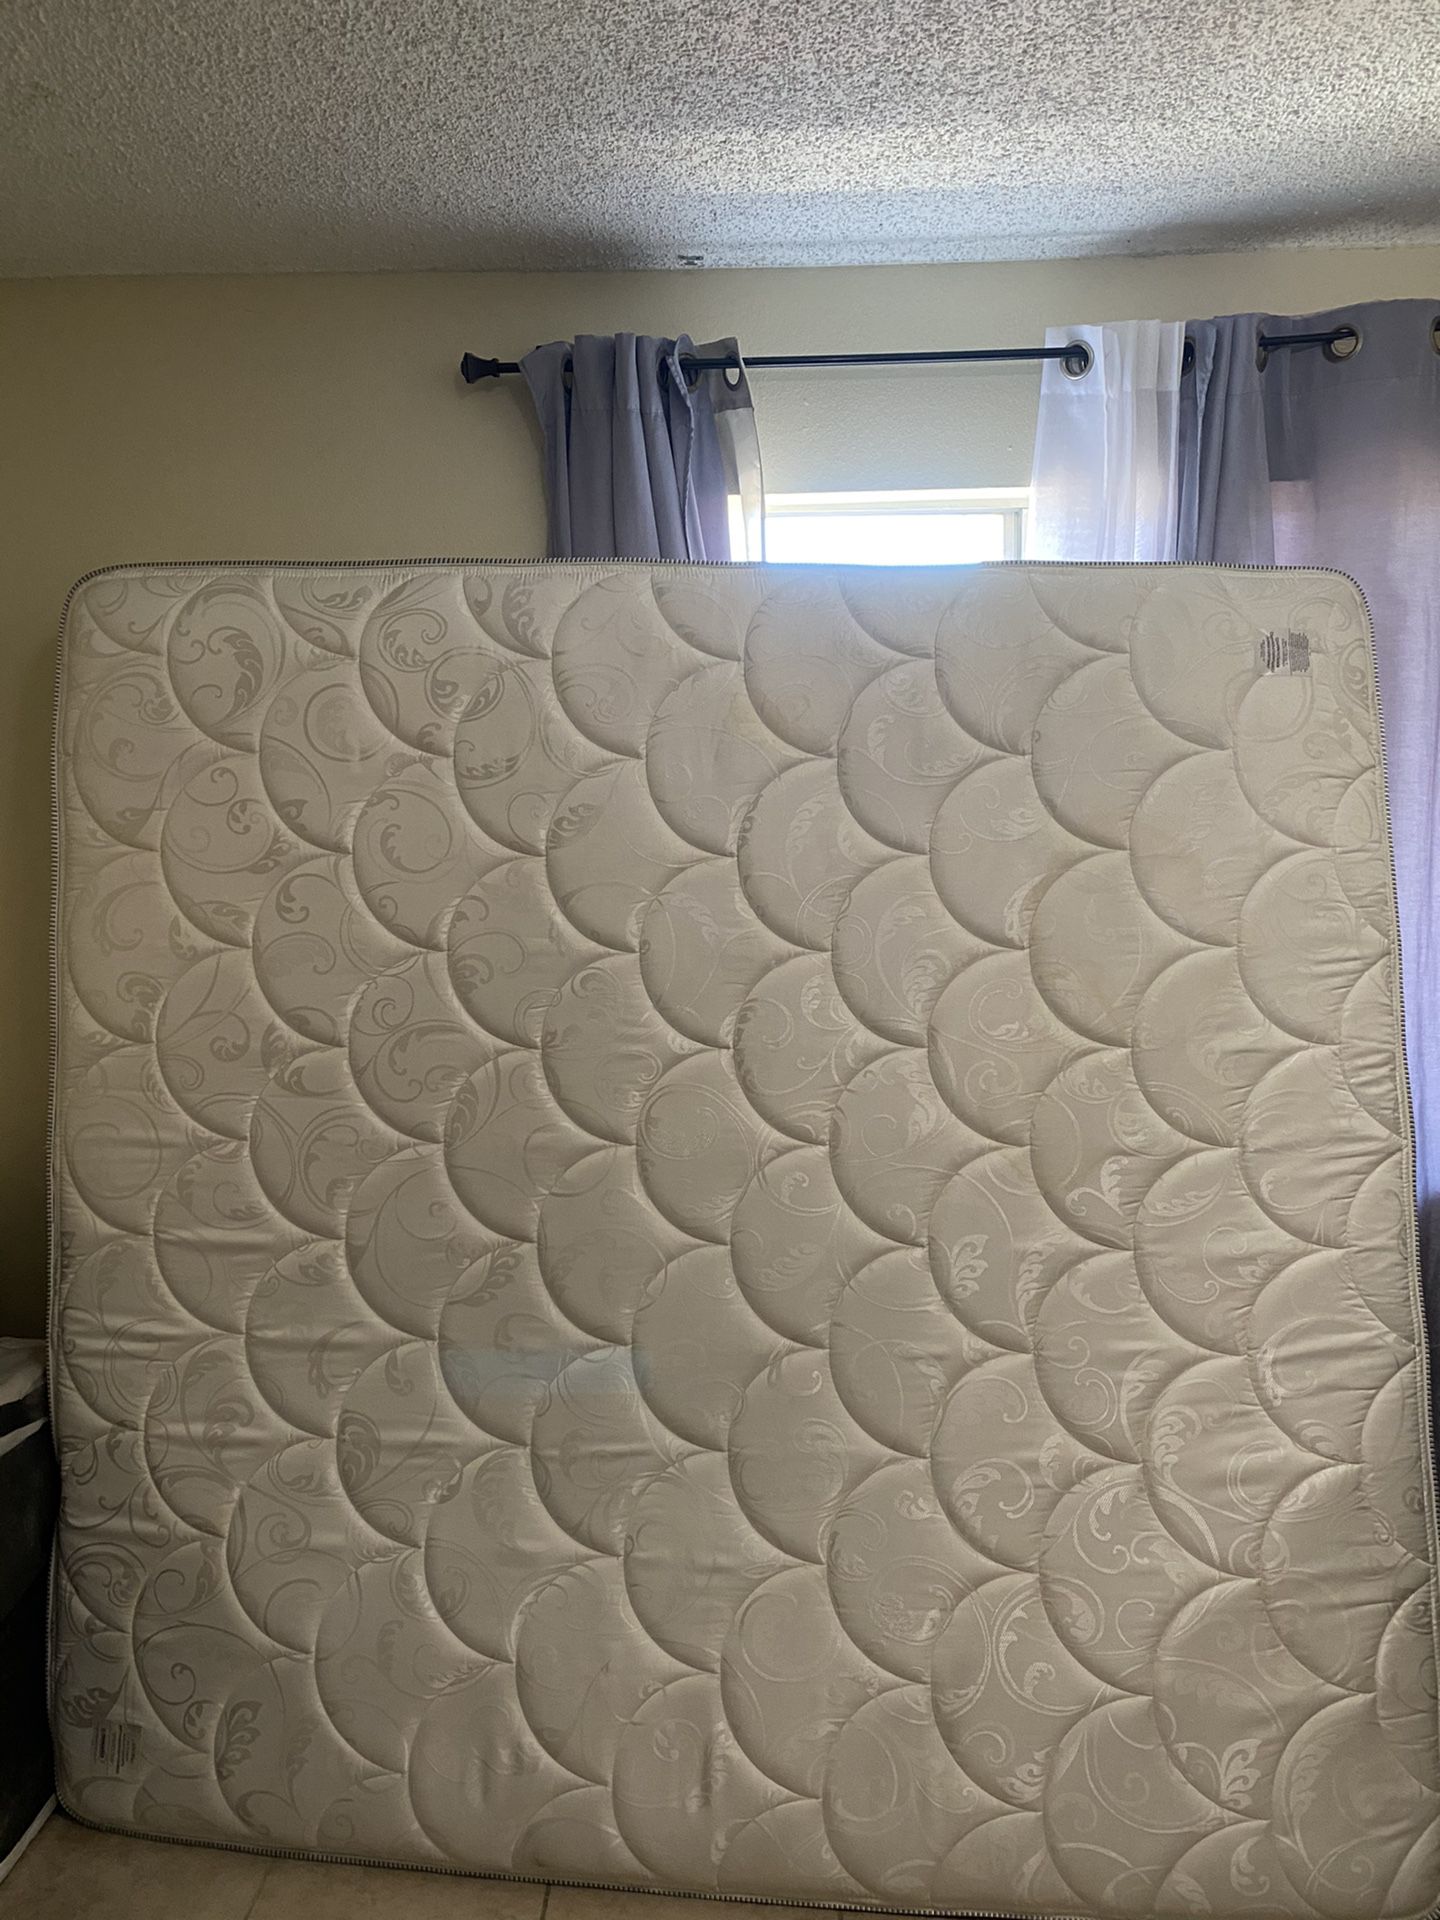 free mattress king size